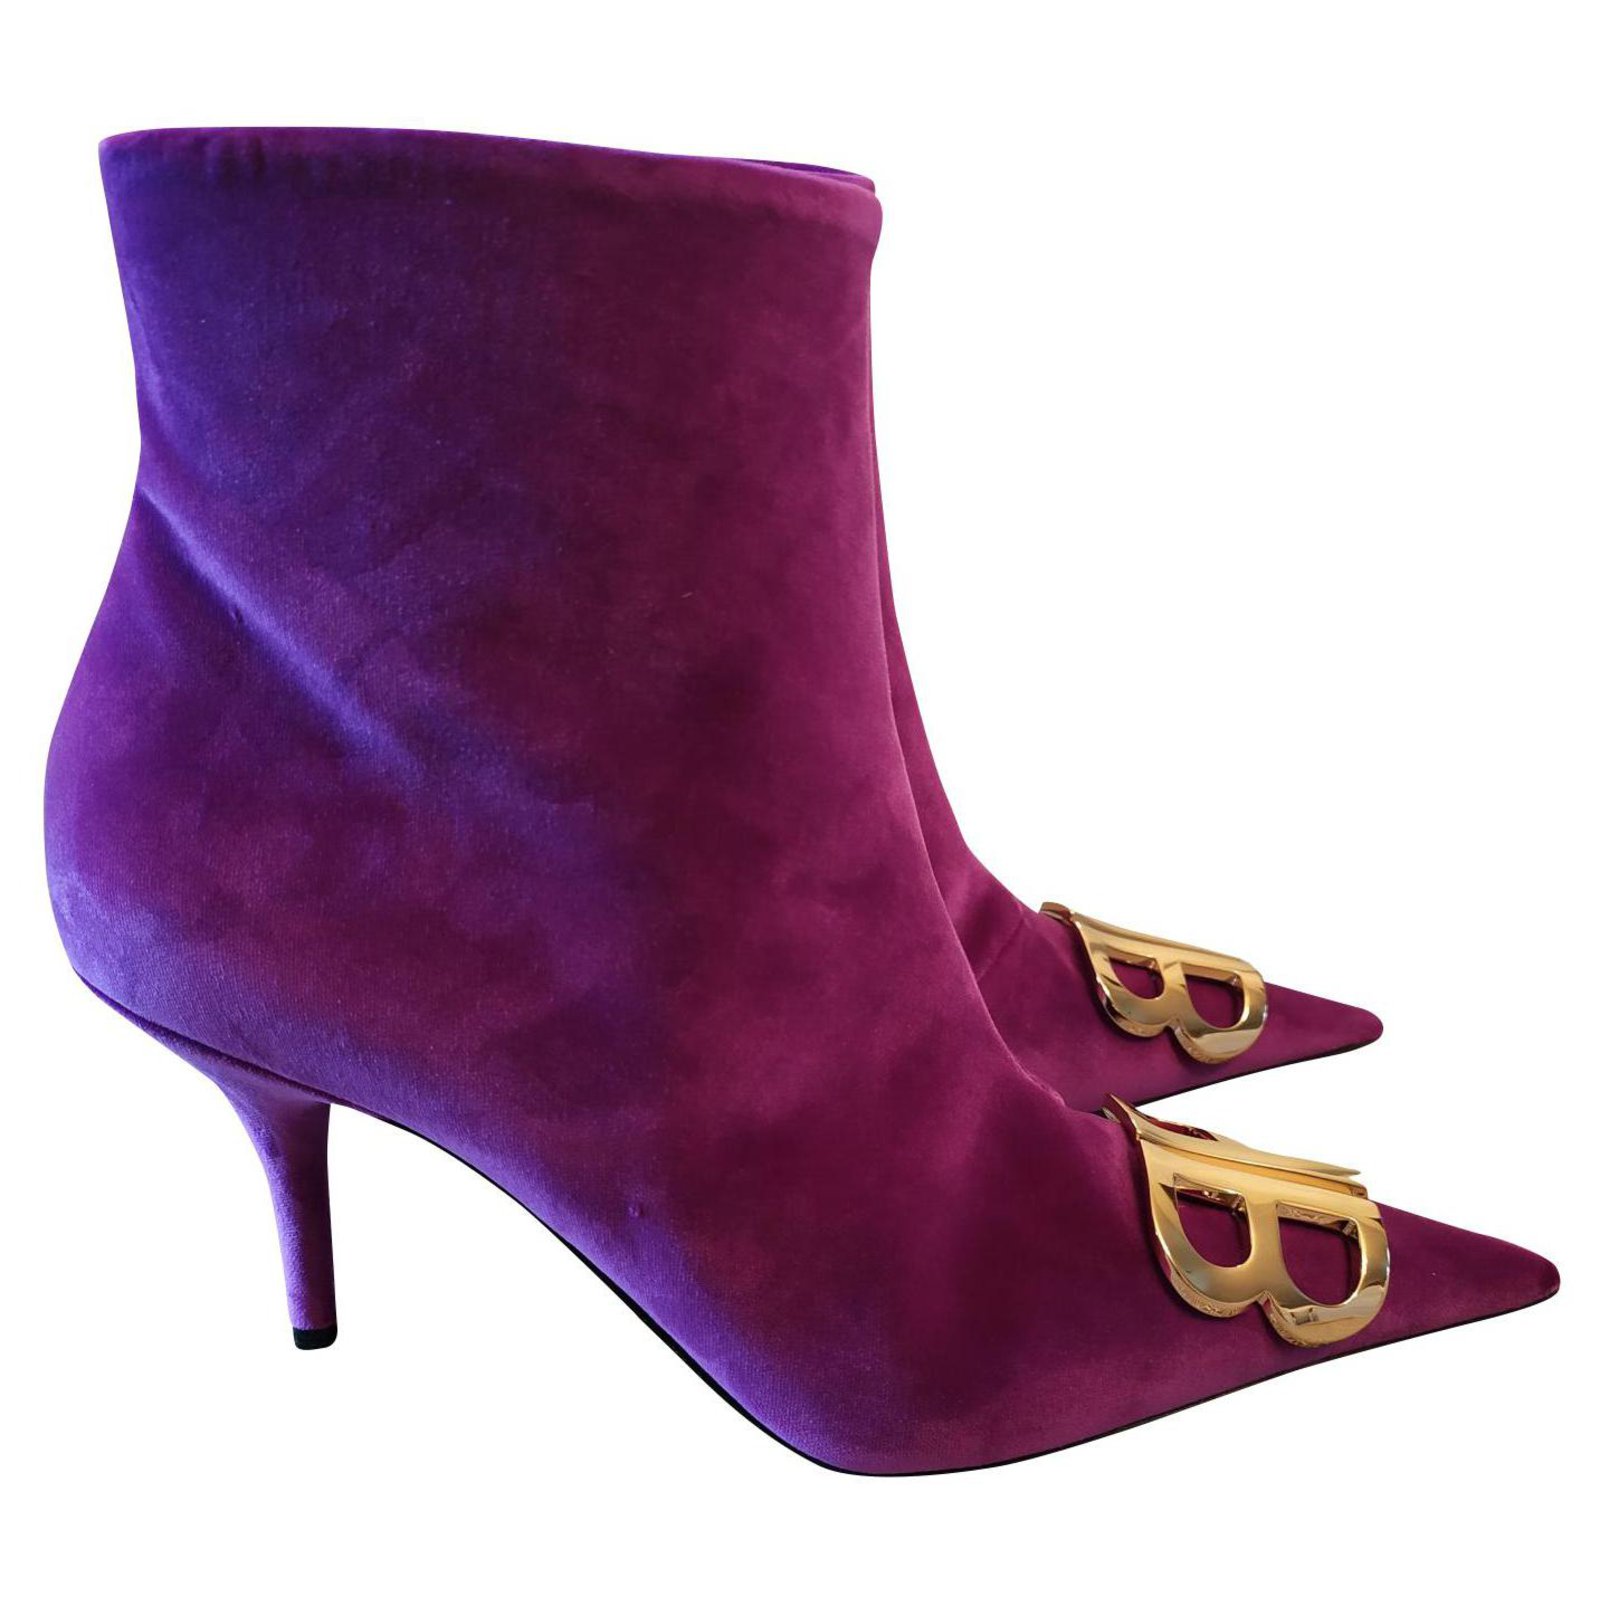 balenciaga bottes femme violet